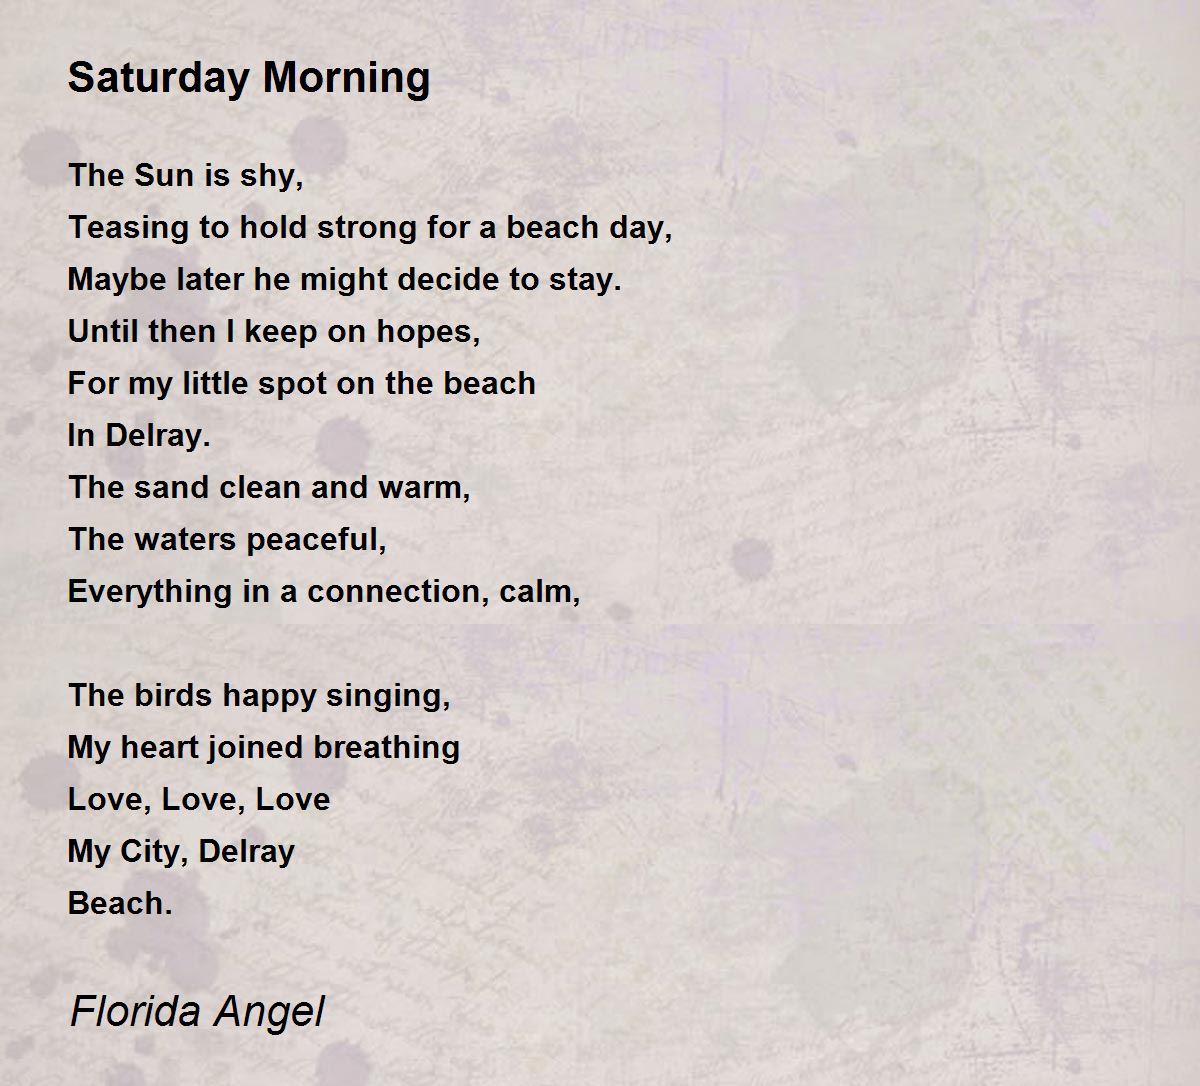 Saturday Morning - Saturday Morning Poem by Florida Angel